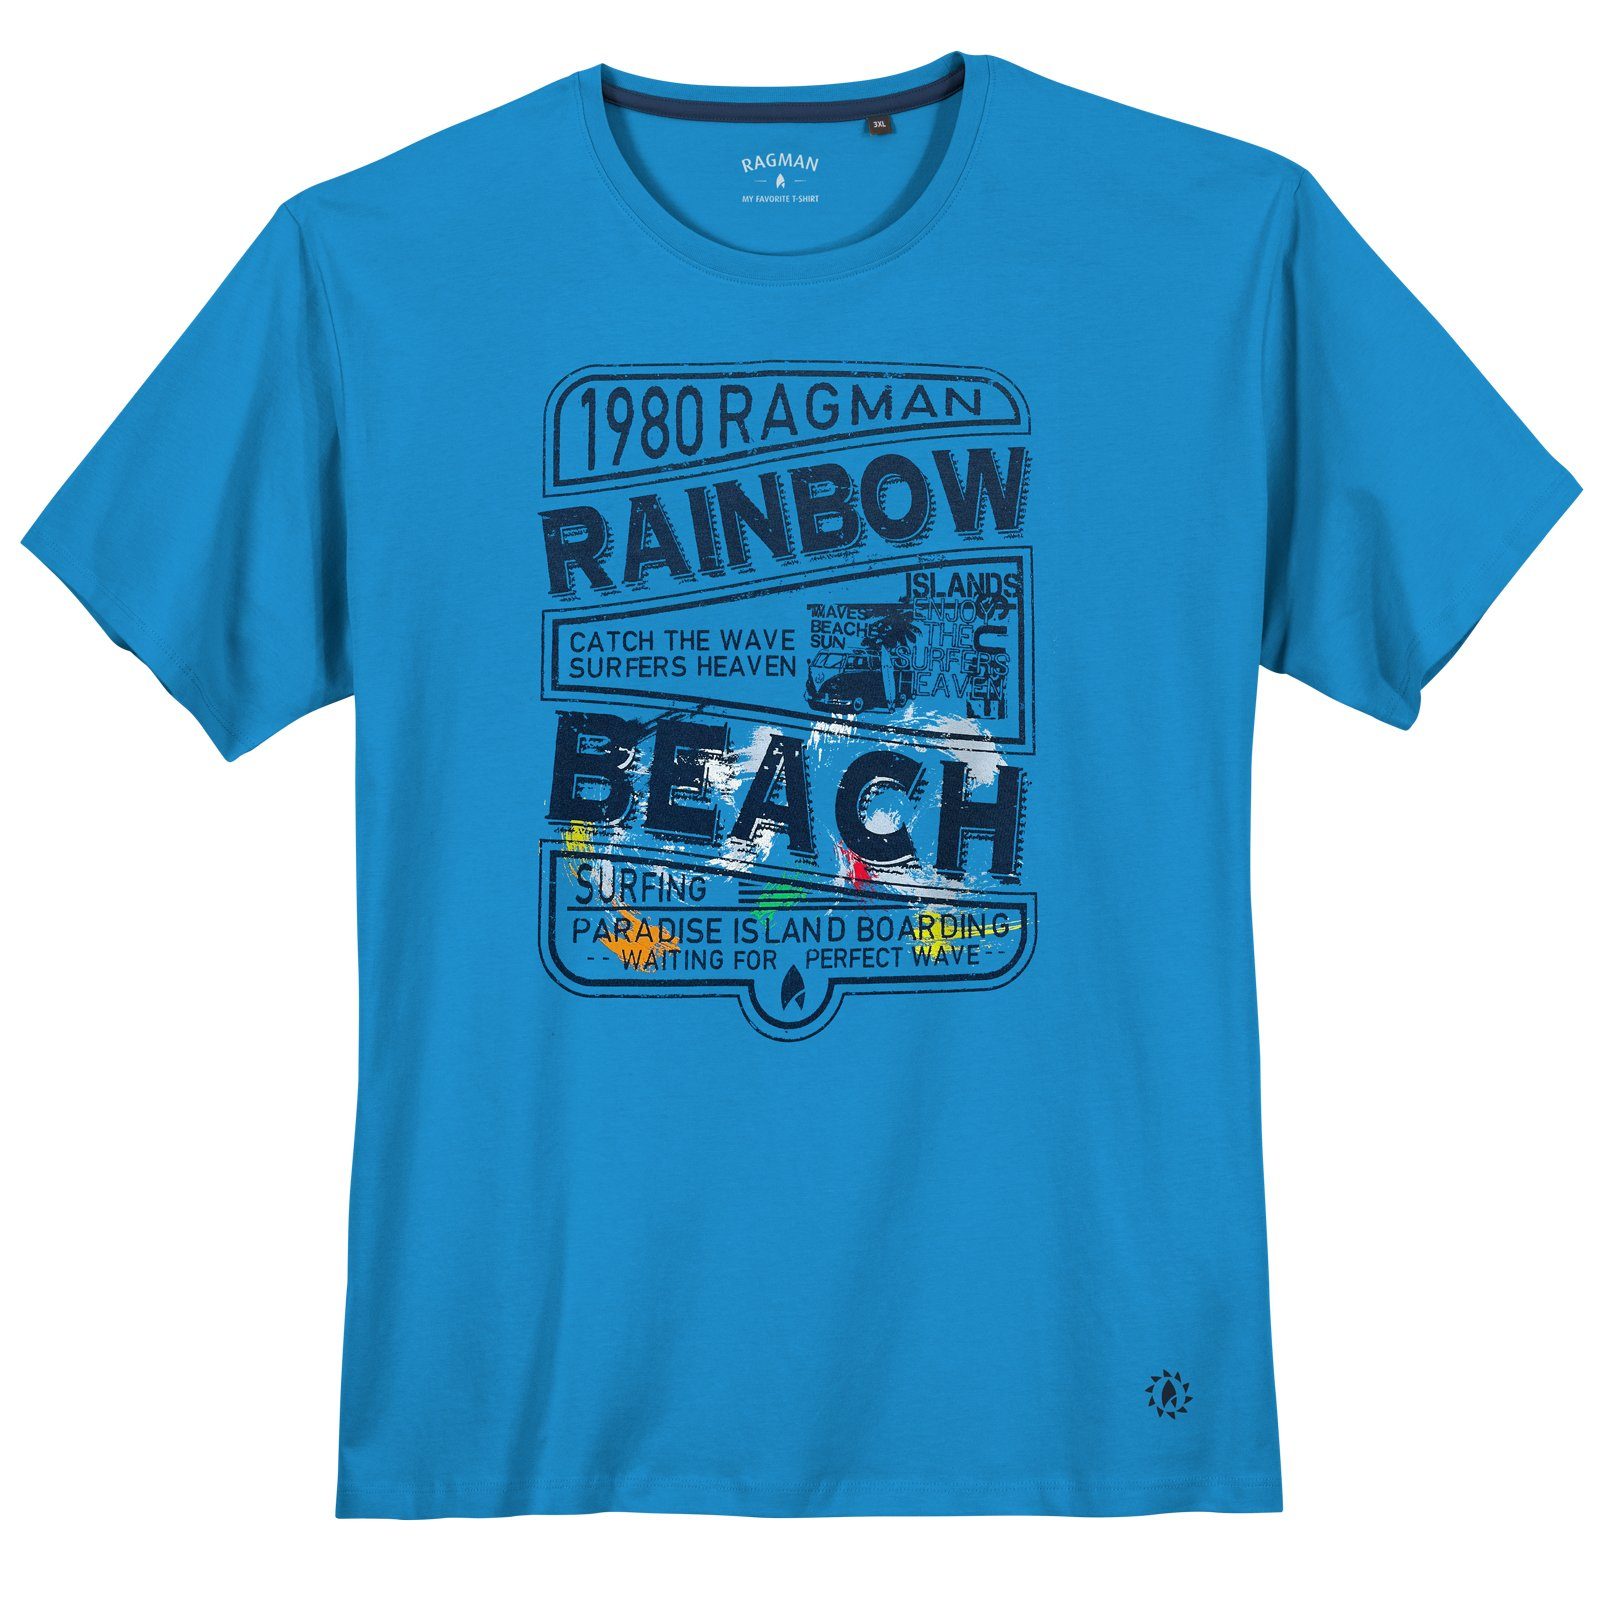 RAGMAN Rundhalsshirt Große Größen Herren T-Shirt azurblau Print Rainbow Beach Ragman